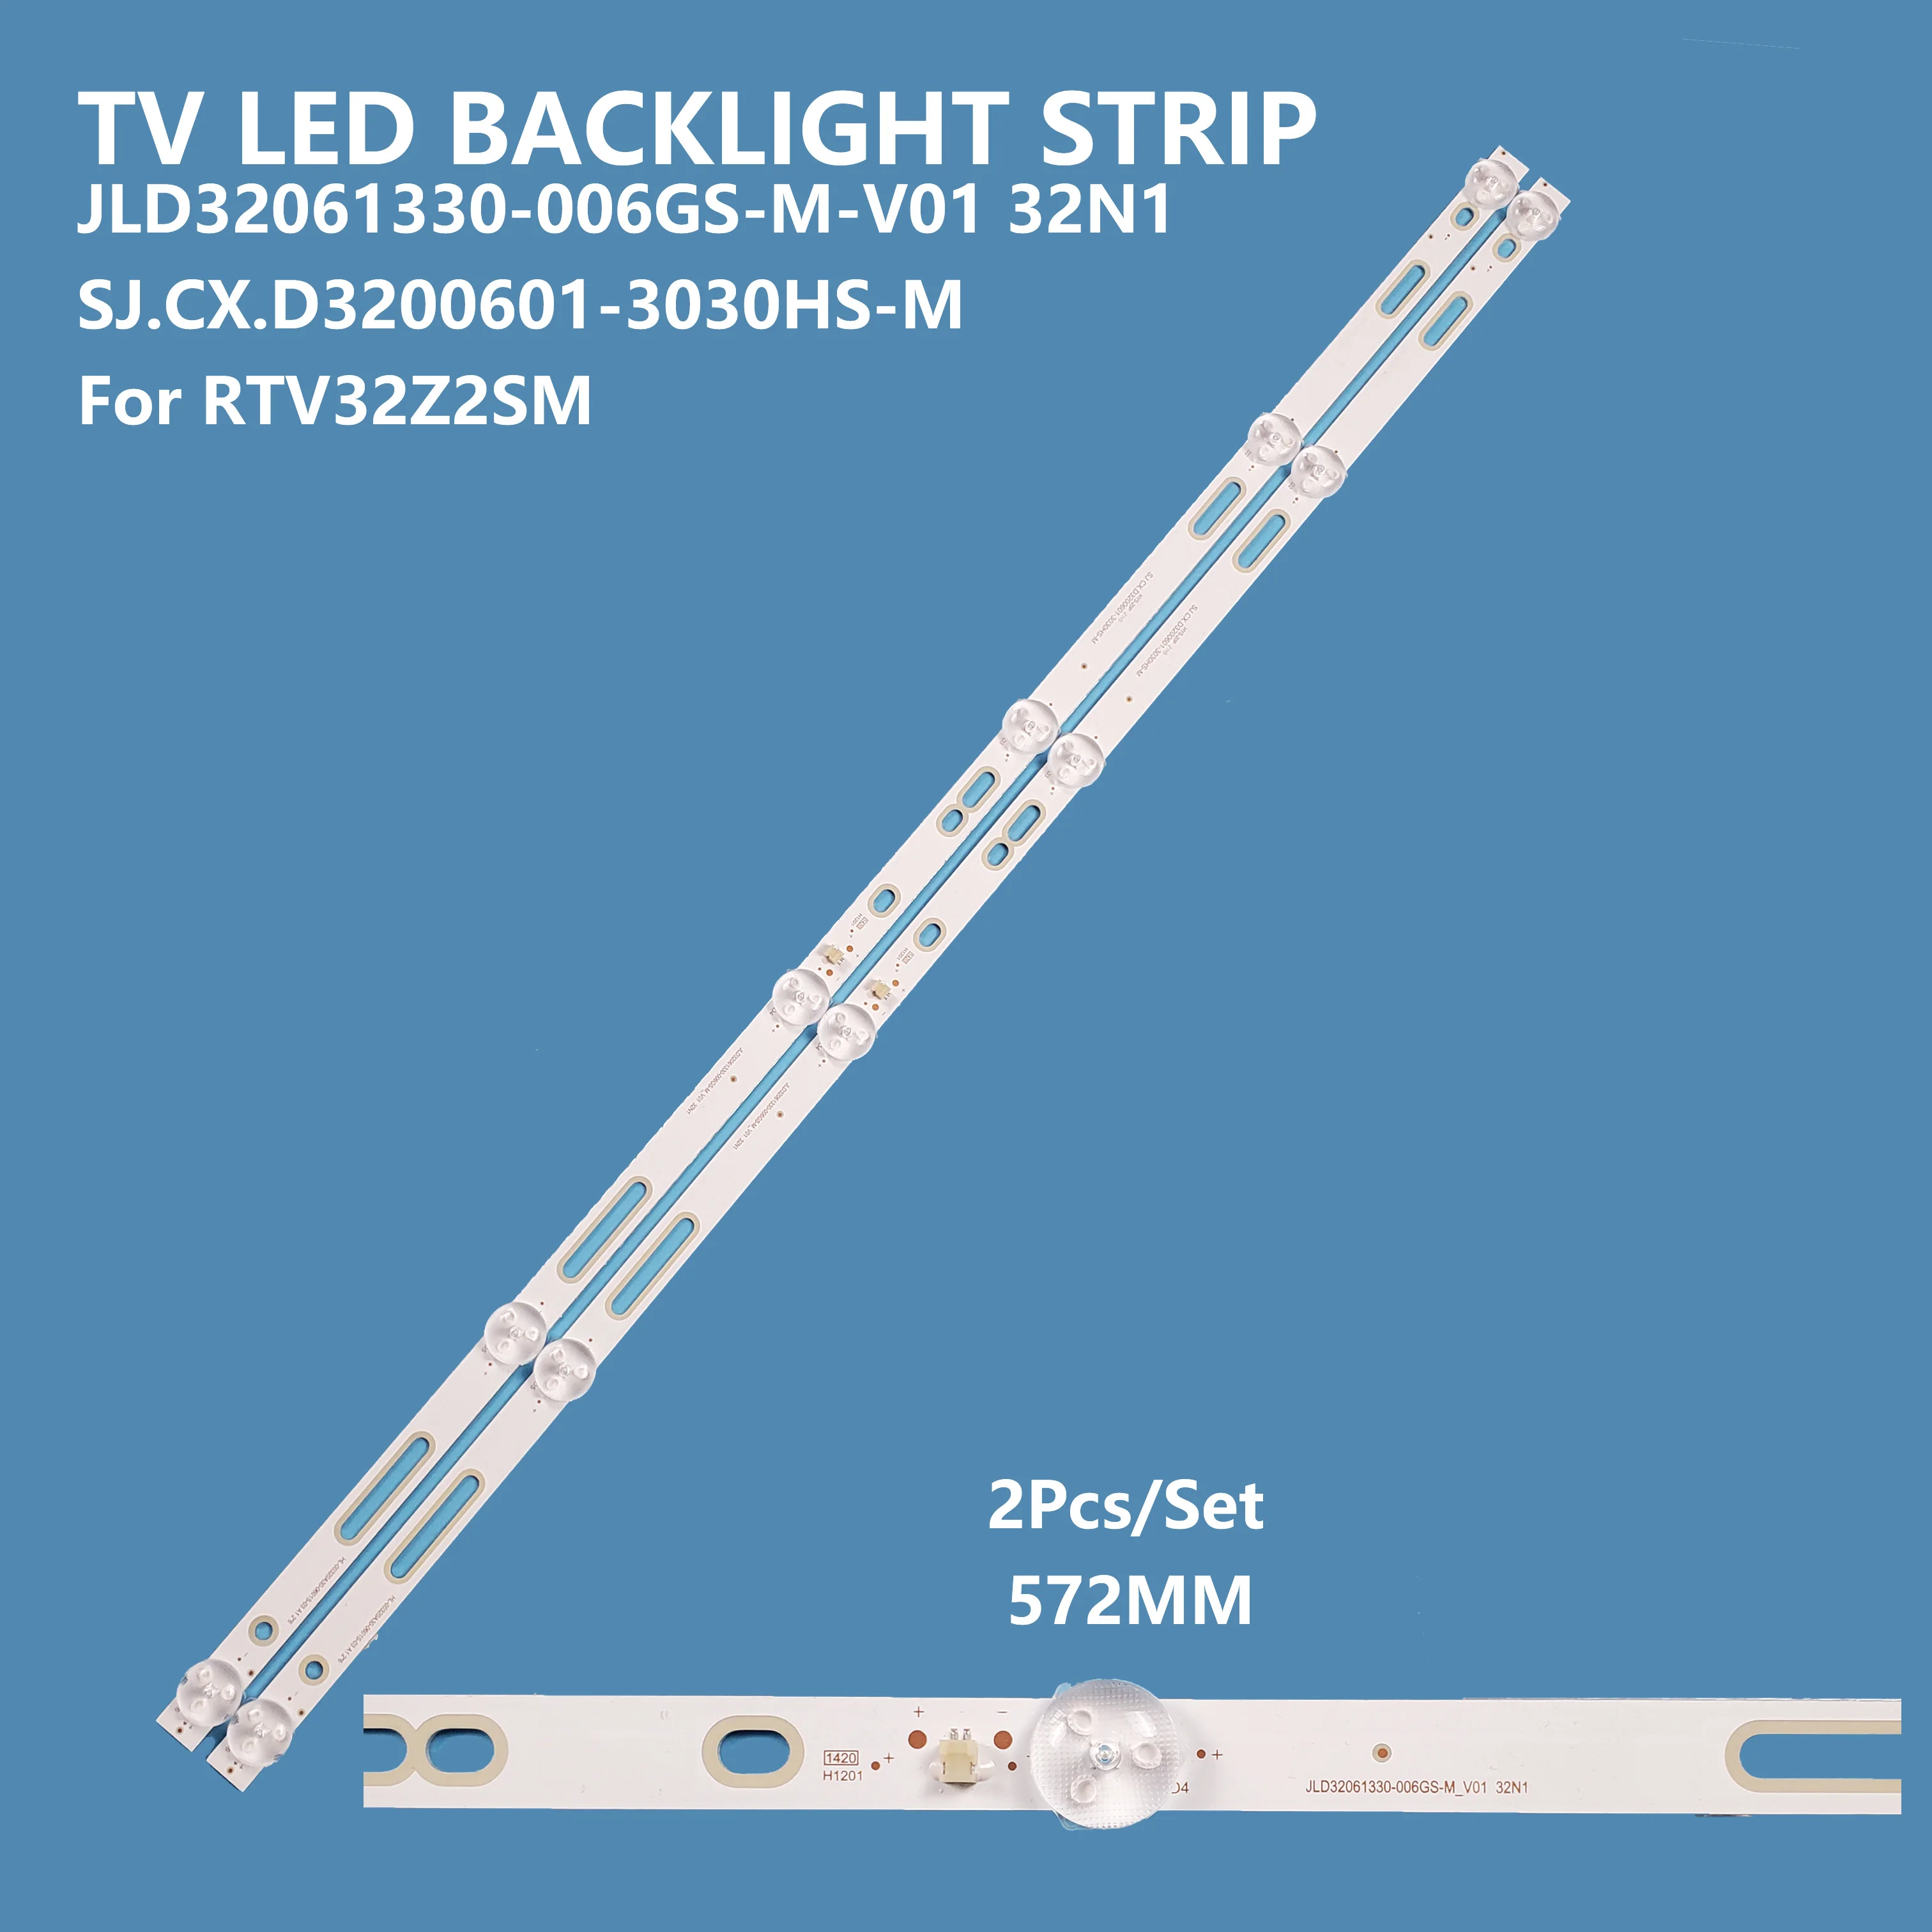 2Pcs/set LED Backlight Bar Light Strip JL.D32061330-006GS-M-V01 32N1 HL-00320A30-0601S-03 A1 for 32inch TV Accessories Repair 2 pcs set 3v 616mm 100% new led backlight strip for tv repair 32inch sj cx d3200701 2835gs m 2pcs set led lighting strip